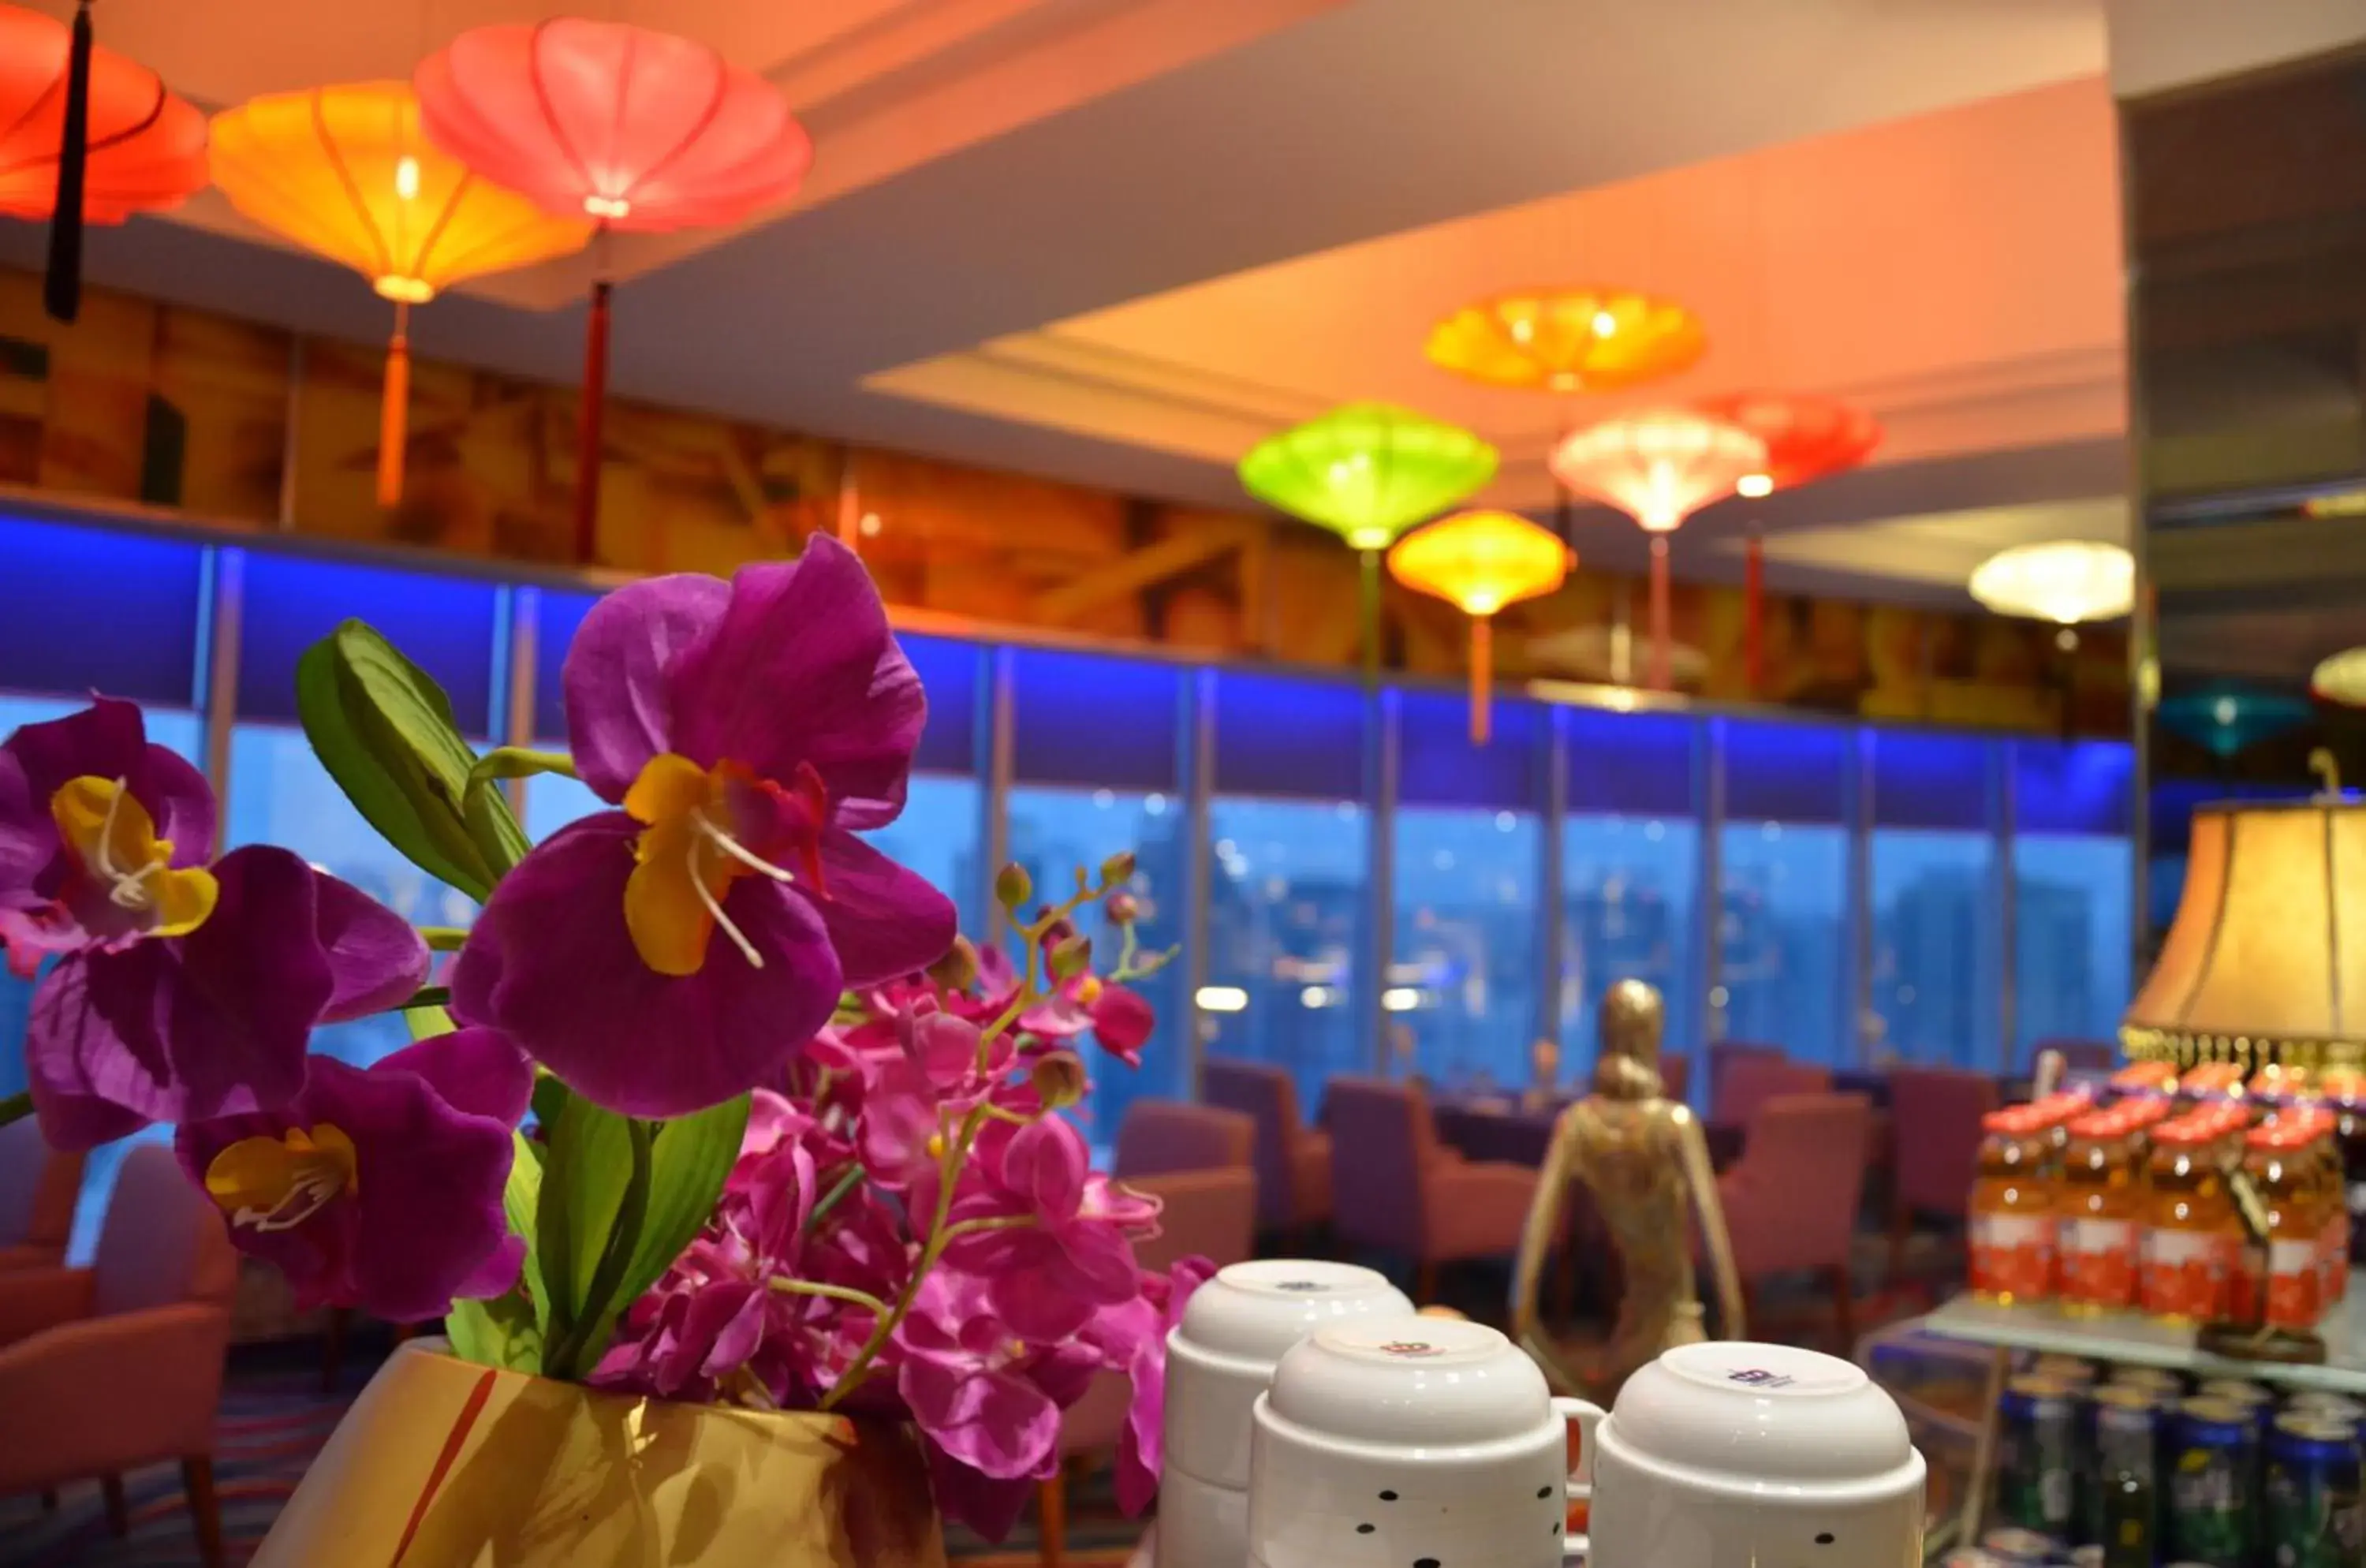 Restaurant/places to eat, Banquet Facilities in Ramada Plaza Optics Valley Hotel Wuhan (Best of Ramada Worldwide)